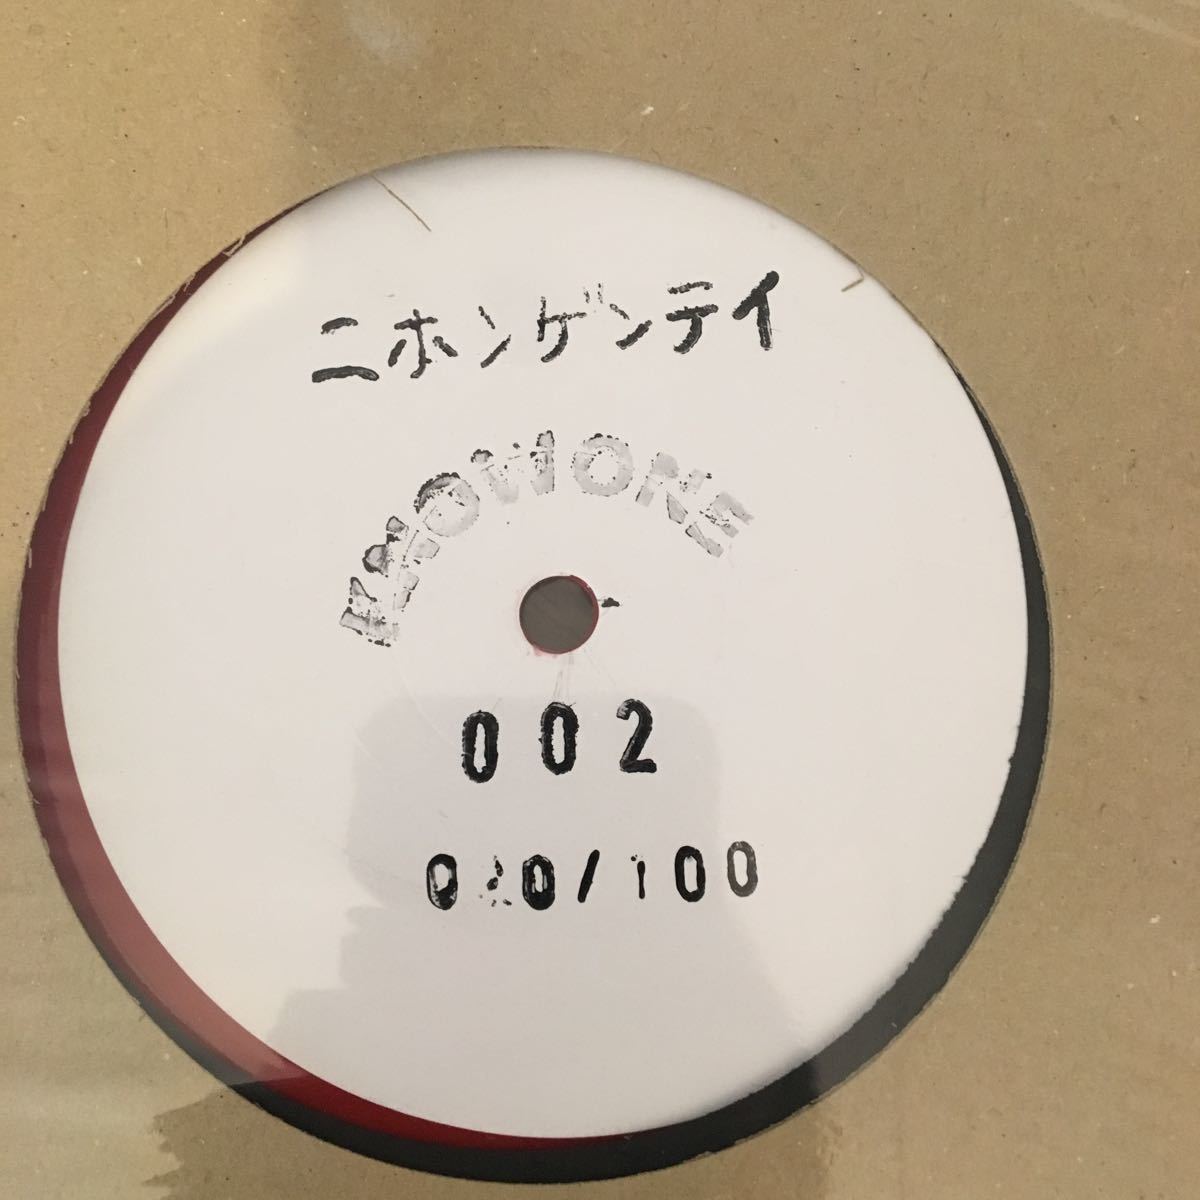 Knowone 002 (Japan Edition) KNOWONE ダブテクノ 限定100枚 レア